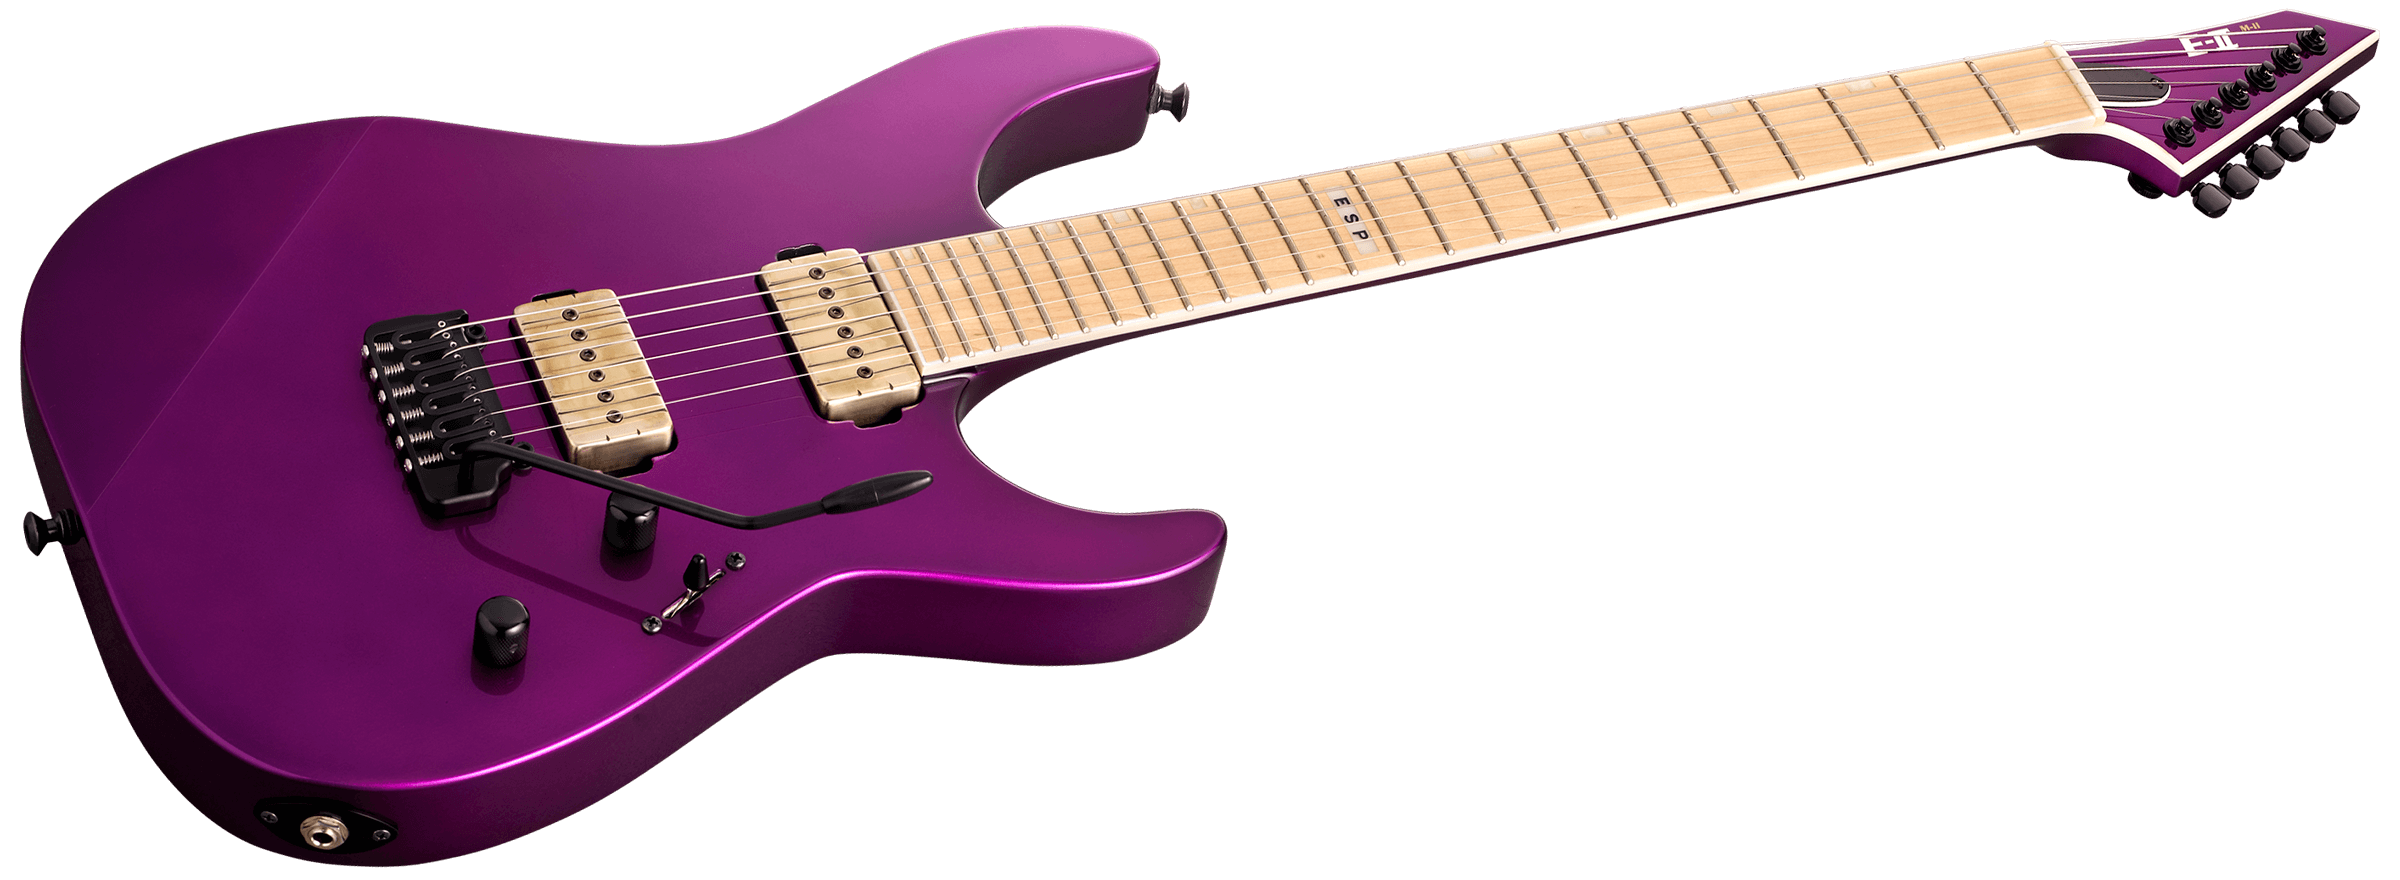 Esp E-ii Mii Hst P Jap 2s P90 Bare Knuckle Trem Mn - Voodoo Purple - Elektrische gitaar in Str-vorm - Variation 2